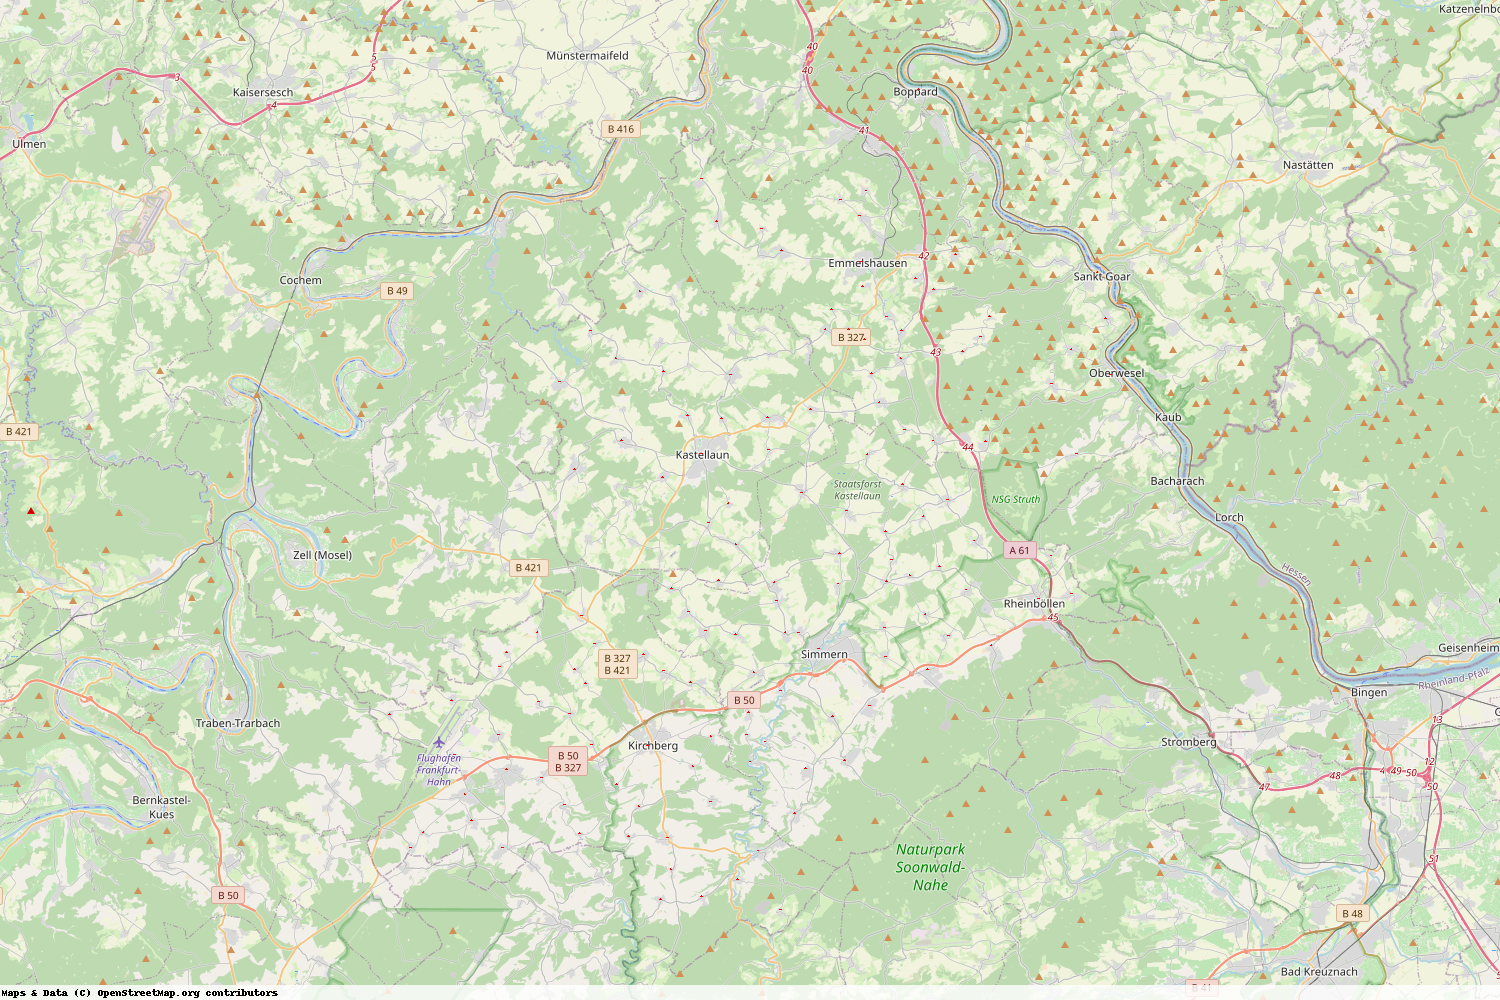 Ist gerade Stromausfall in Rheinland-Pfalz - Rhein-Hunsrück-Kreis?